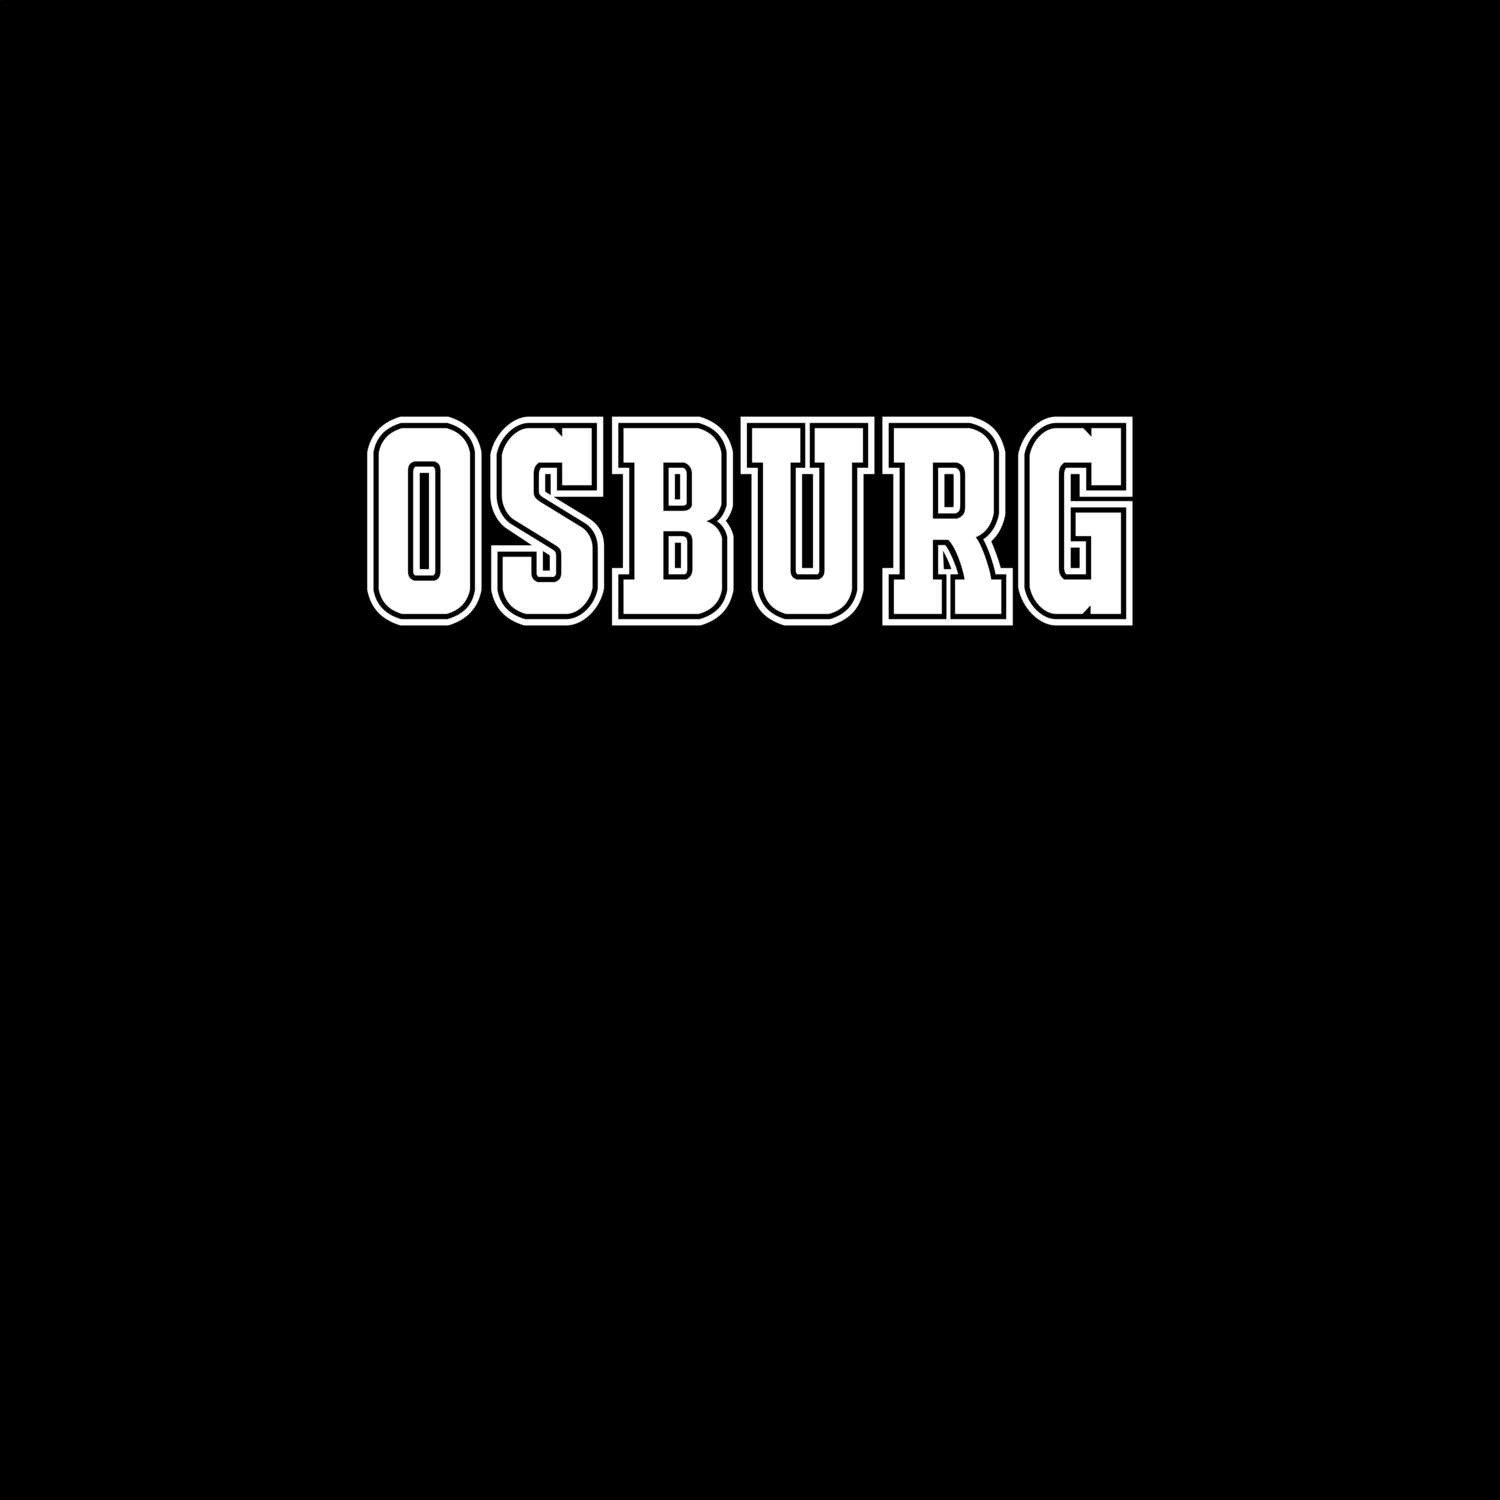 Osburg T-Shirt »Classic«